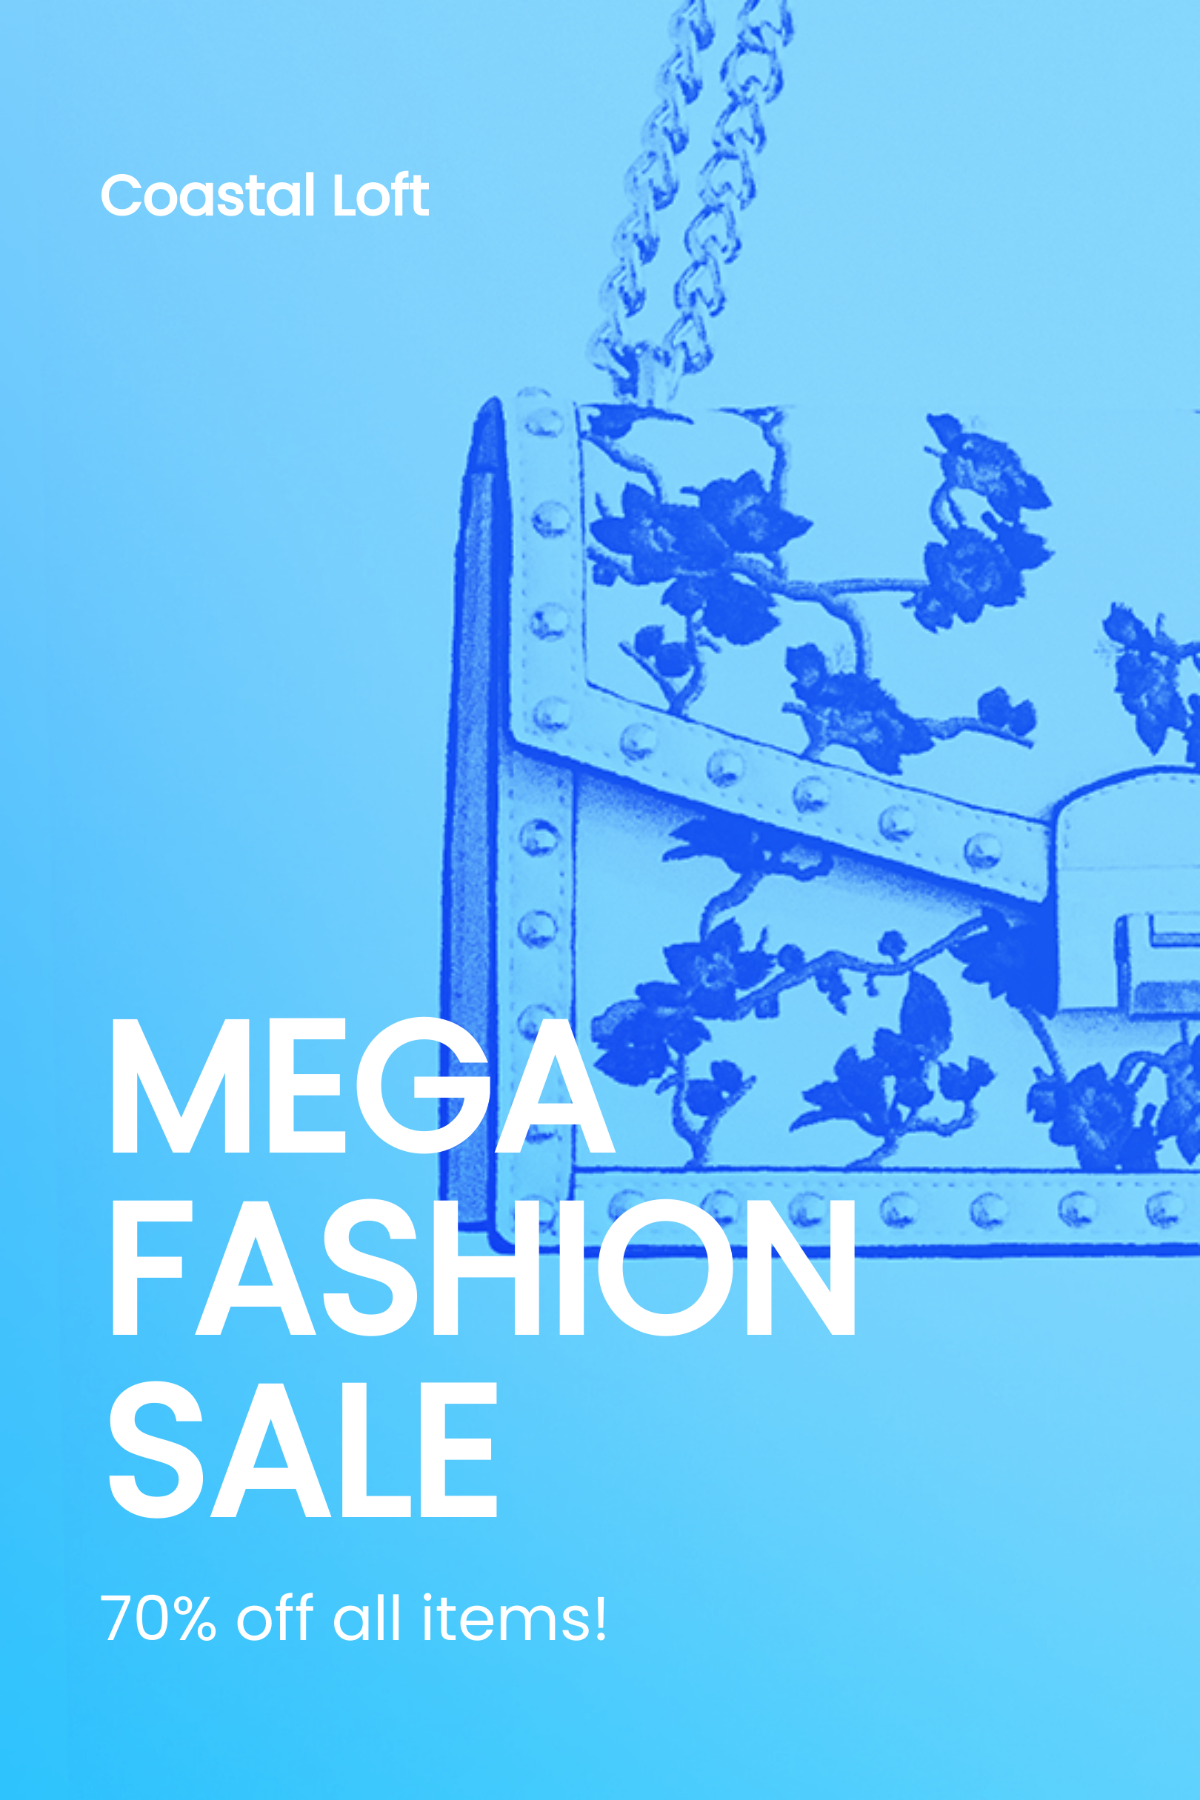 Free Fashion Sale Promotion Tumblr Post Template